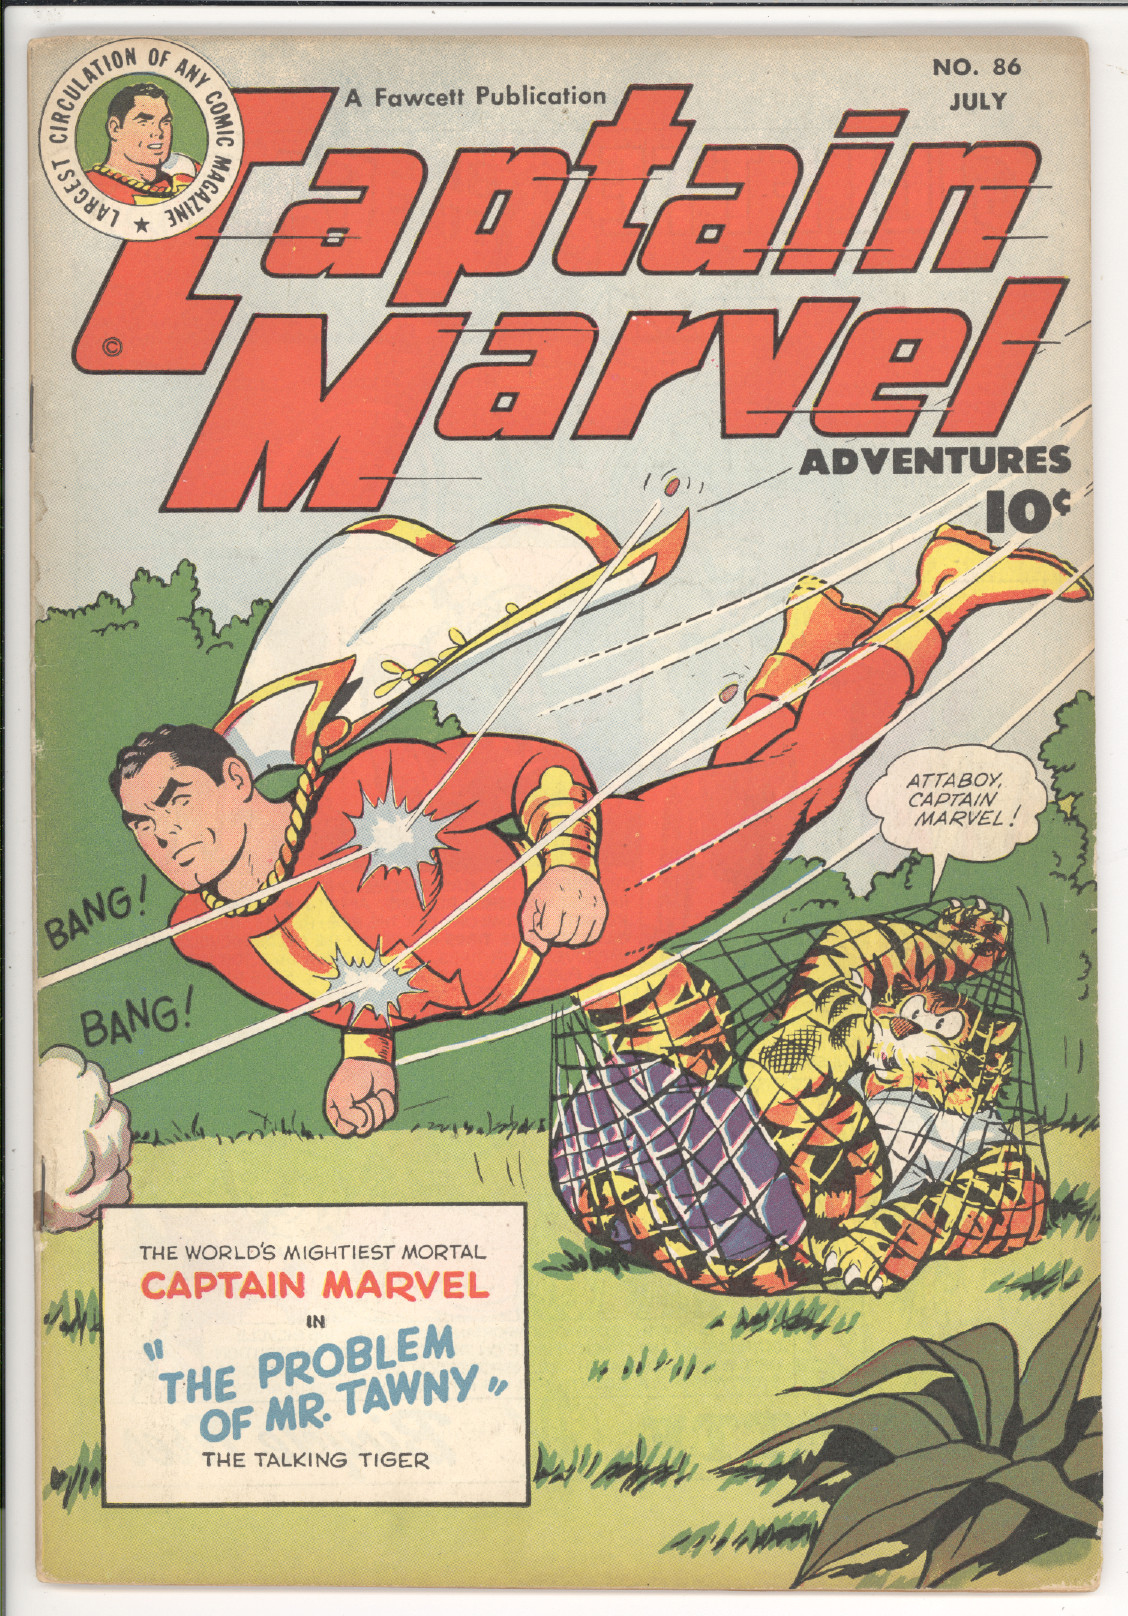 Captain Marvel Adventures #86 front